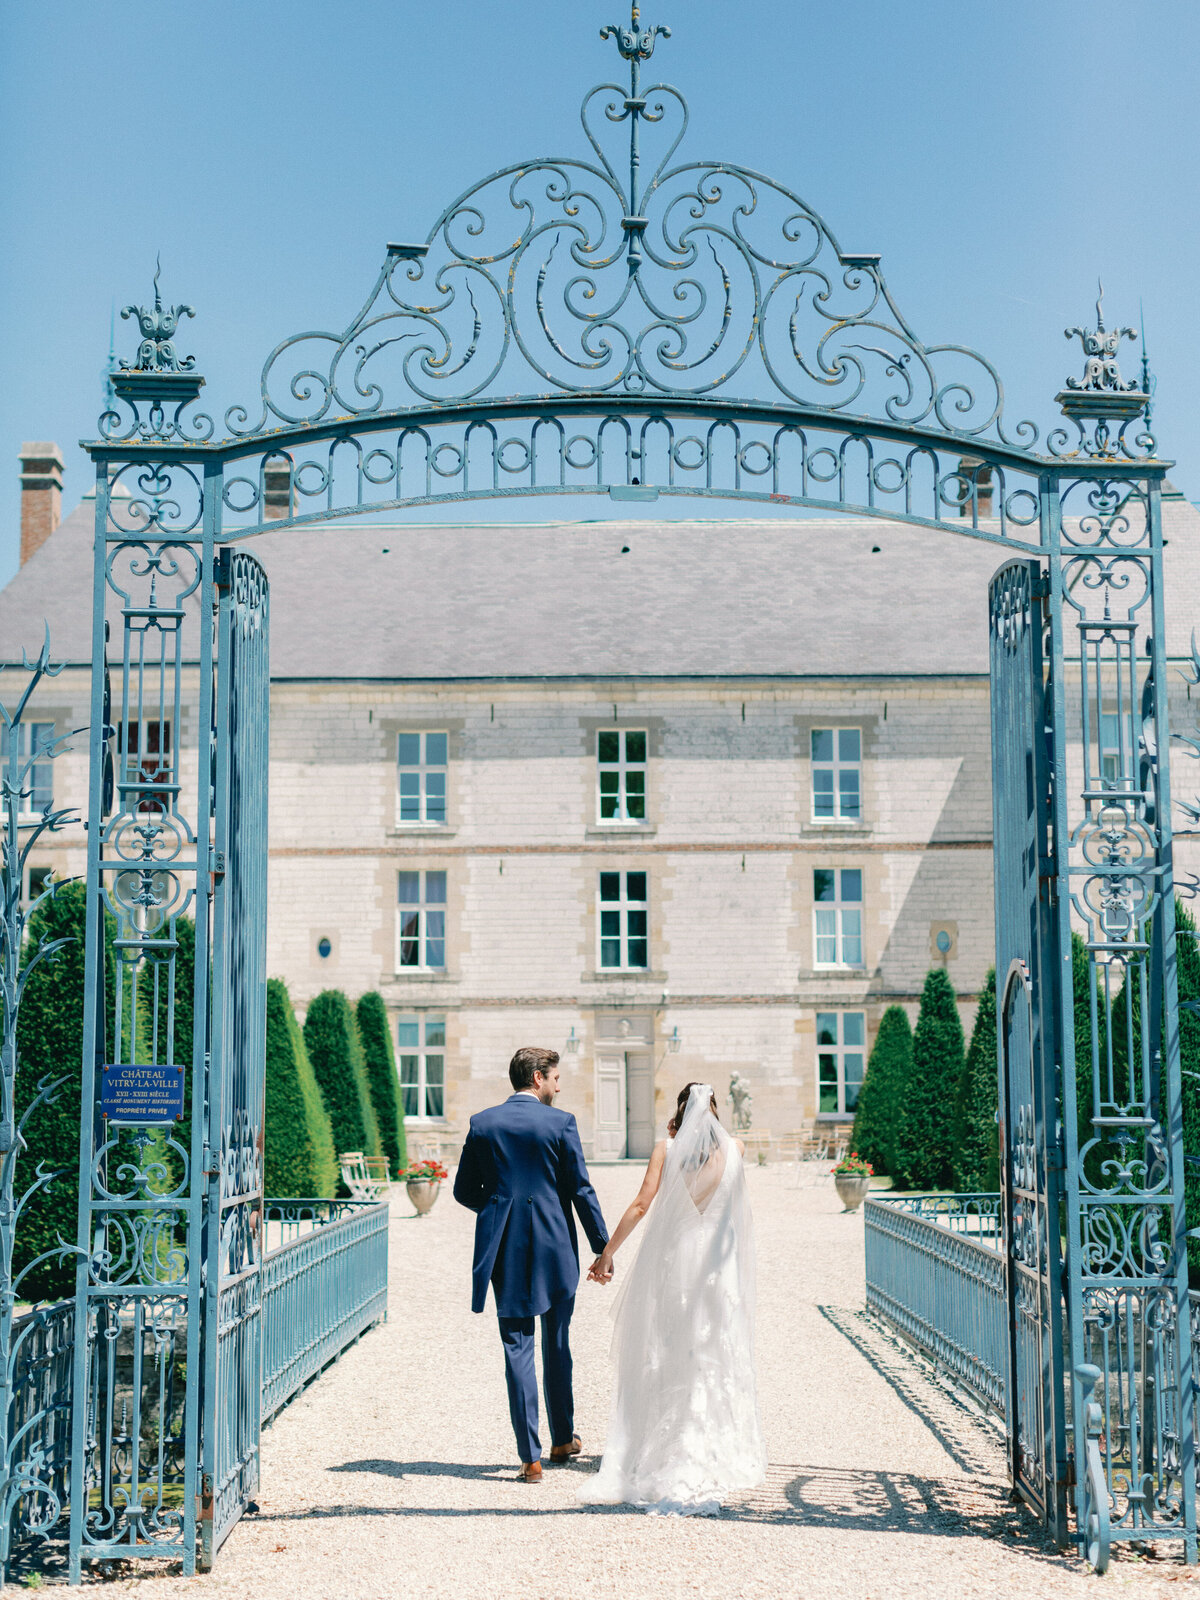 48-02072022-_81A7226-Olivia-Poncelet-Wedding-Chateau-de-Vitry-la-Ville-France-WEB-150